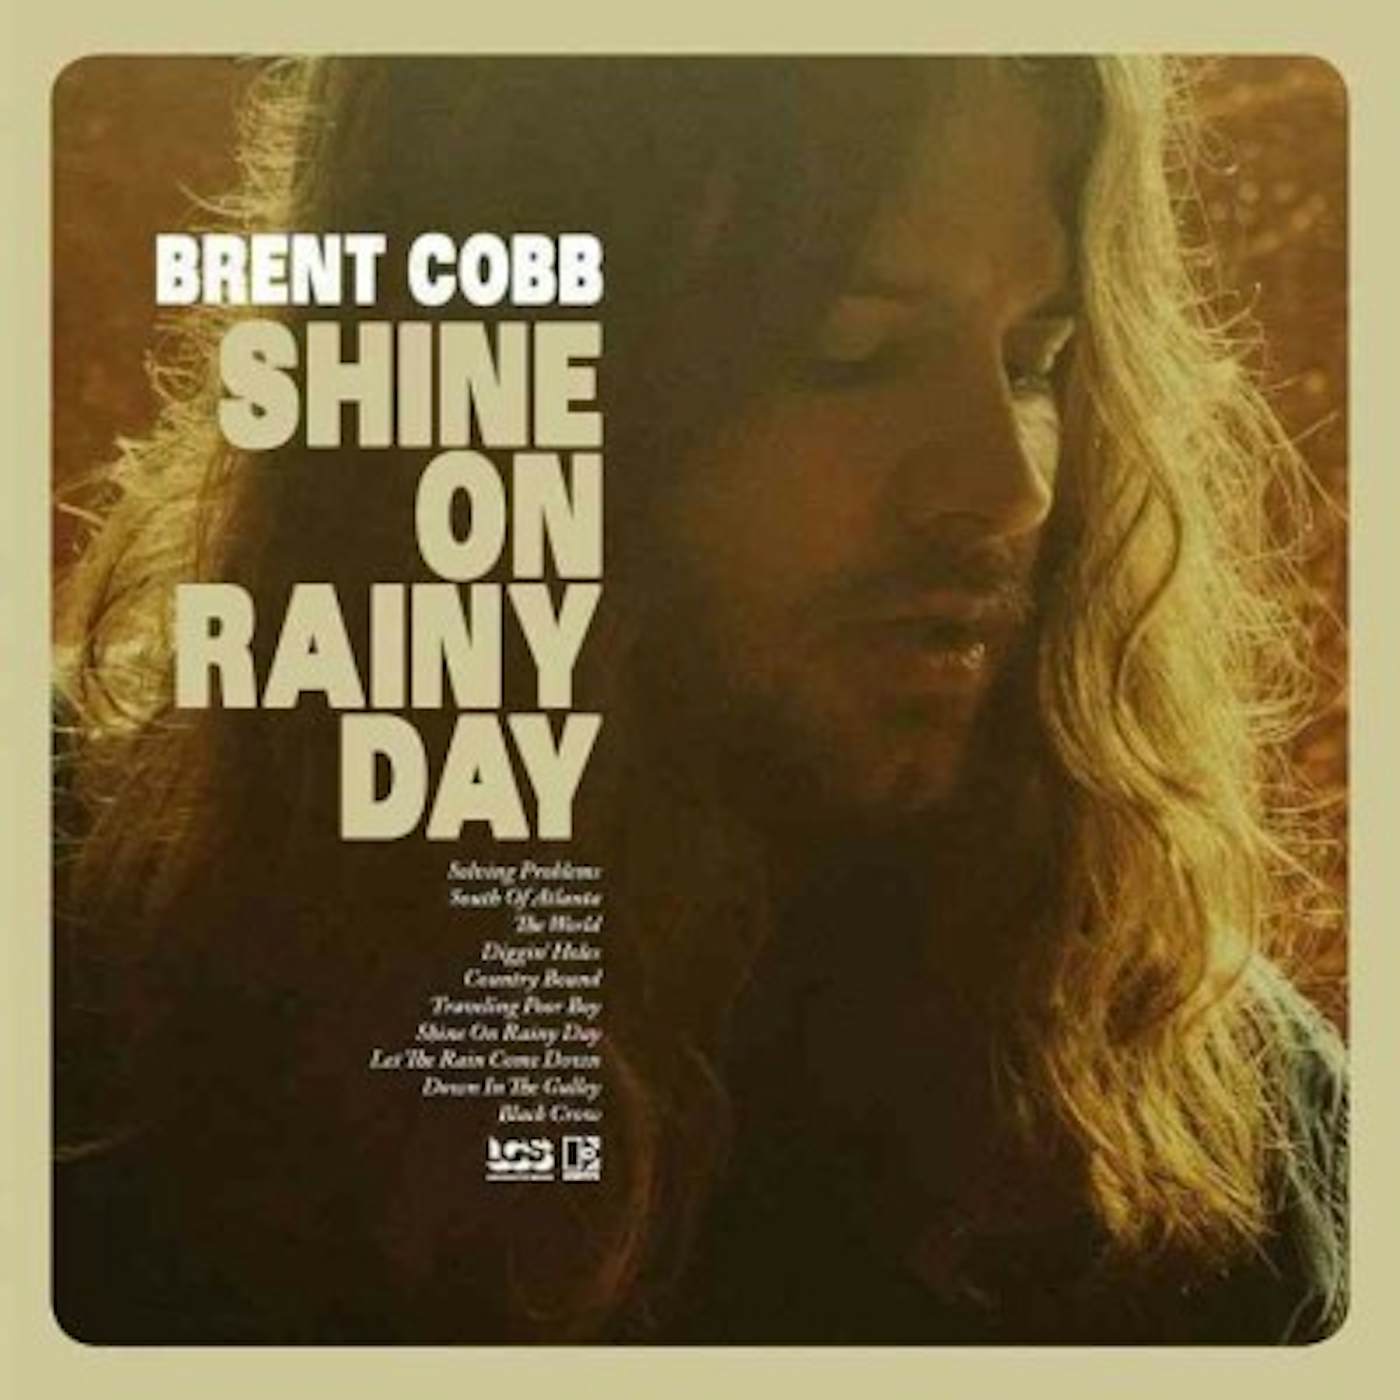 Brent Cobb Shine on Rainy Day Vinyl Record